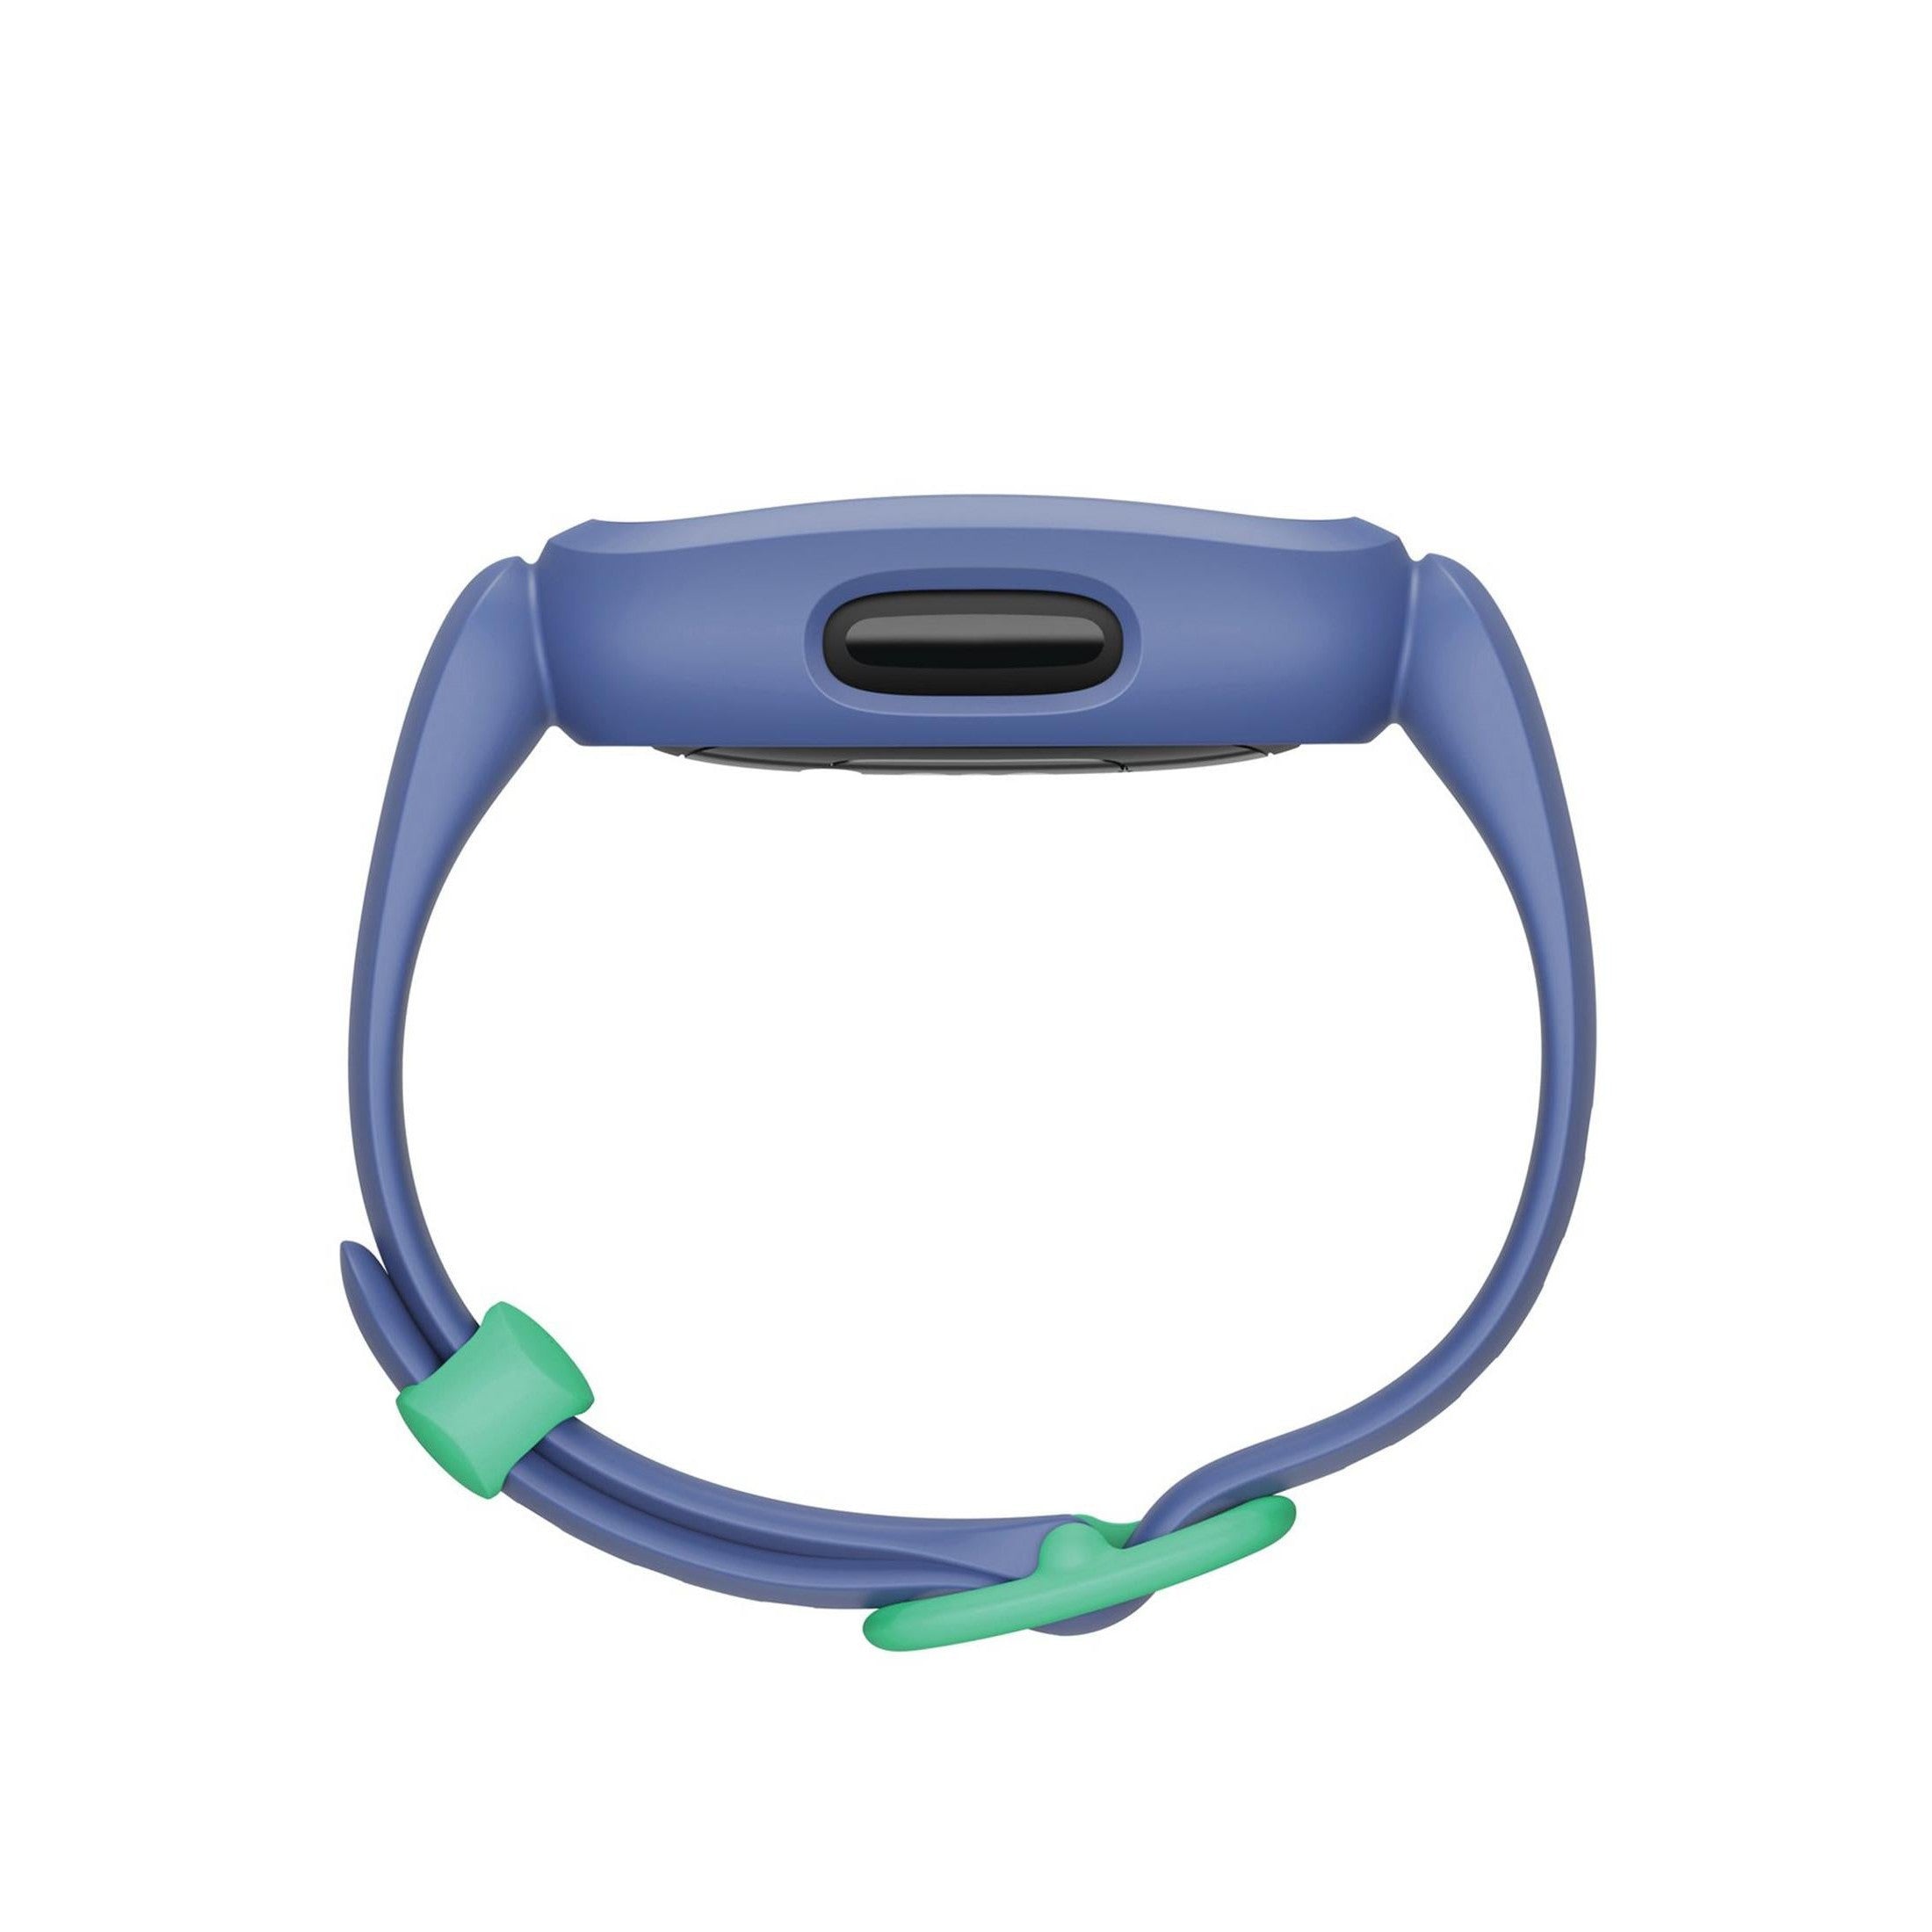 Fitbit Ace 3 Kids Activity Tracker - Blue